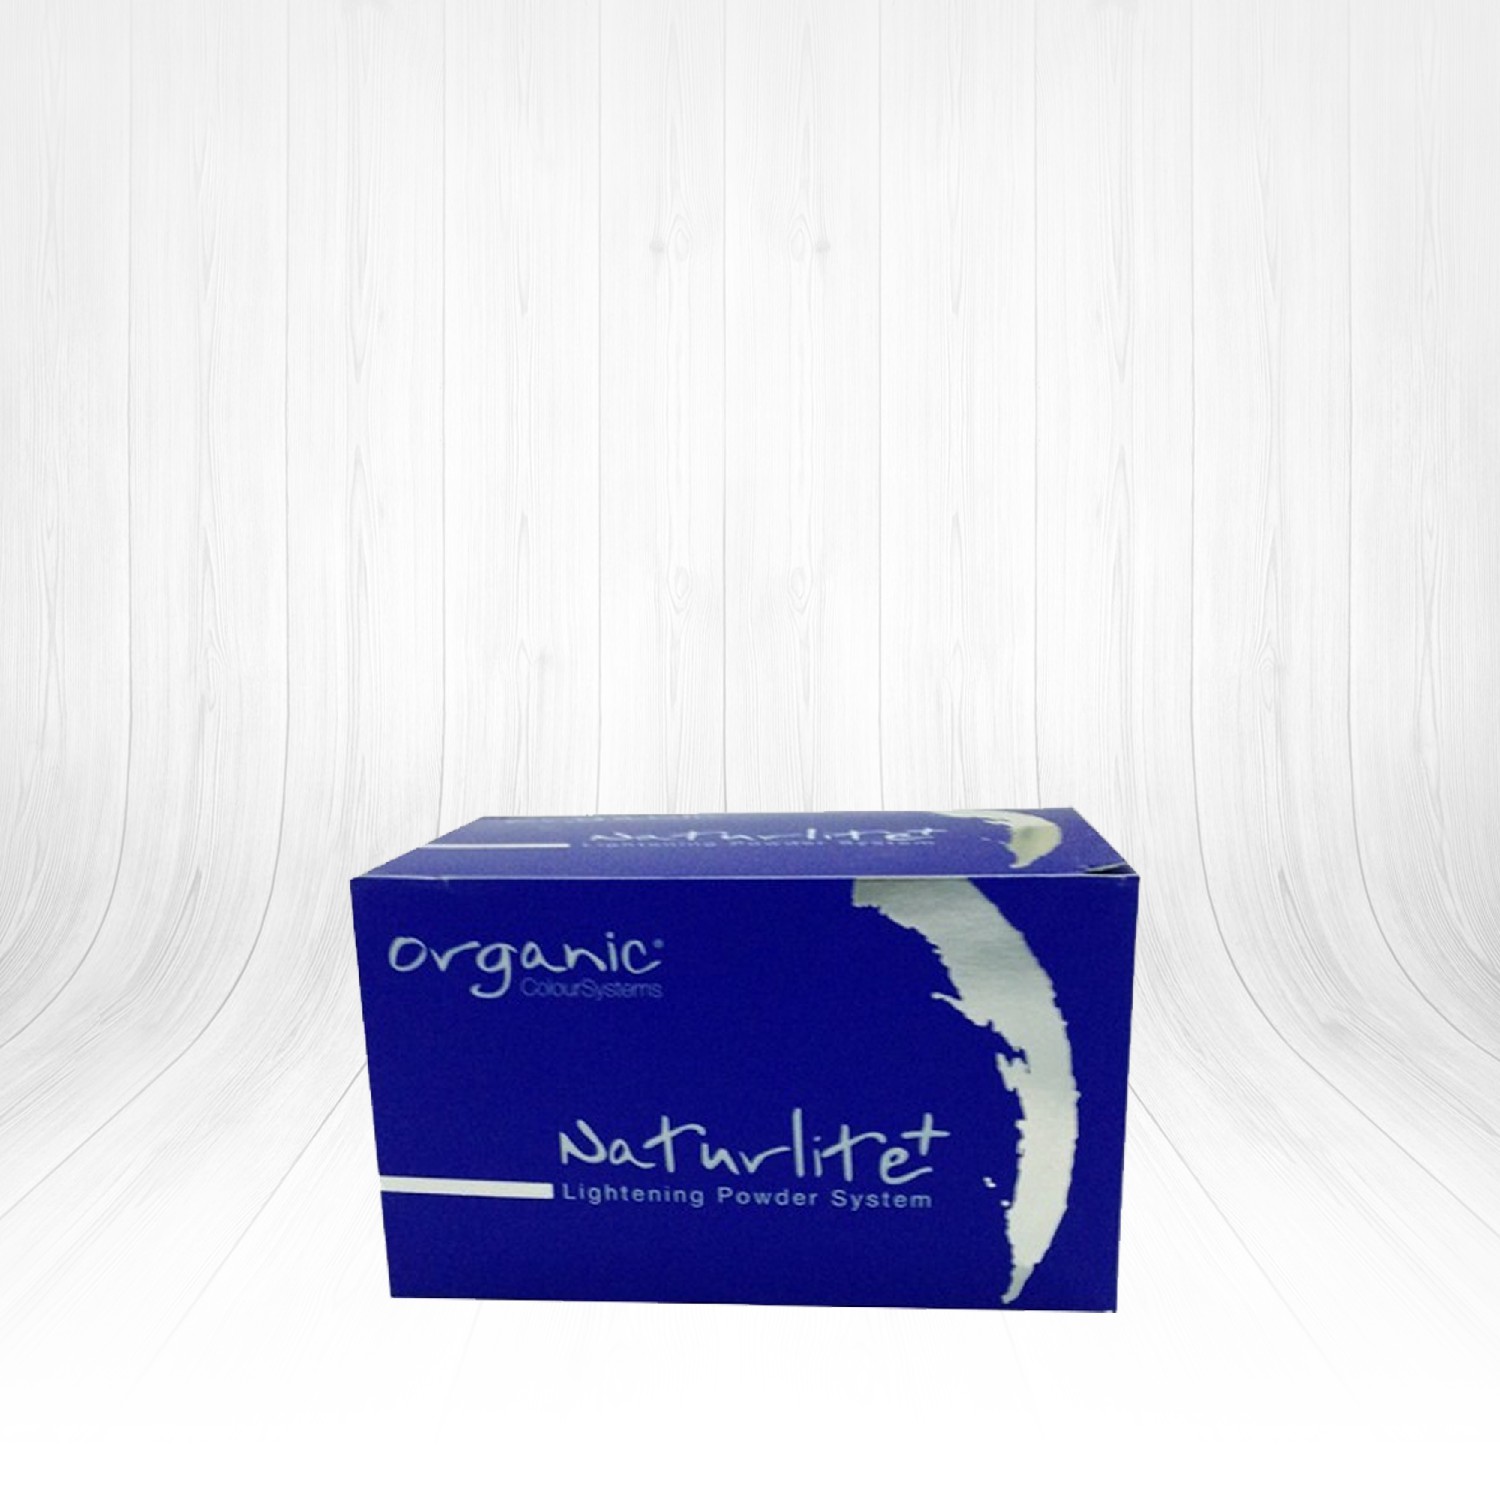 Organic Naturlite Toz Saç Açıcı g